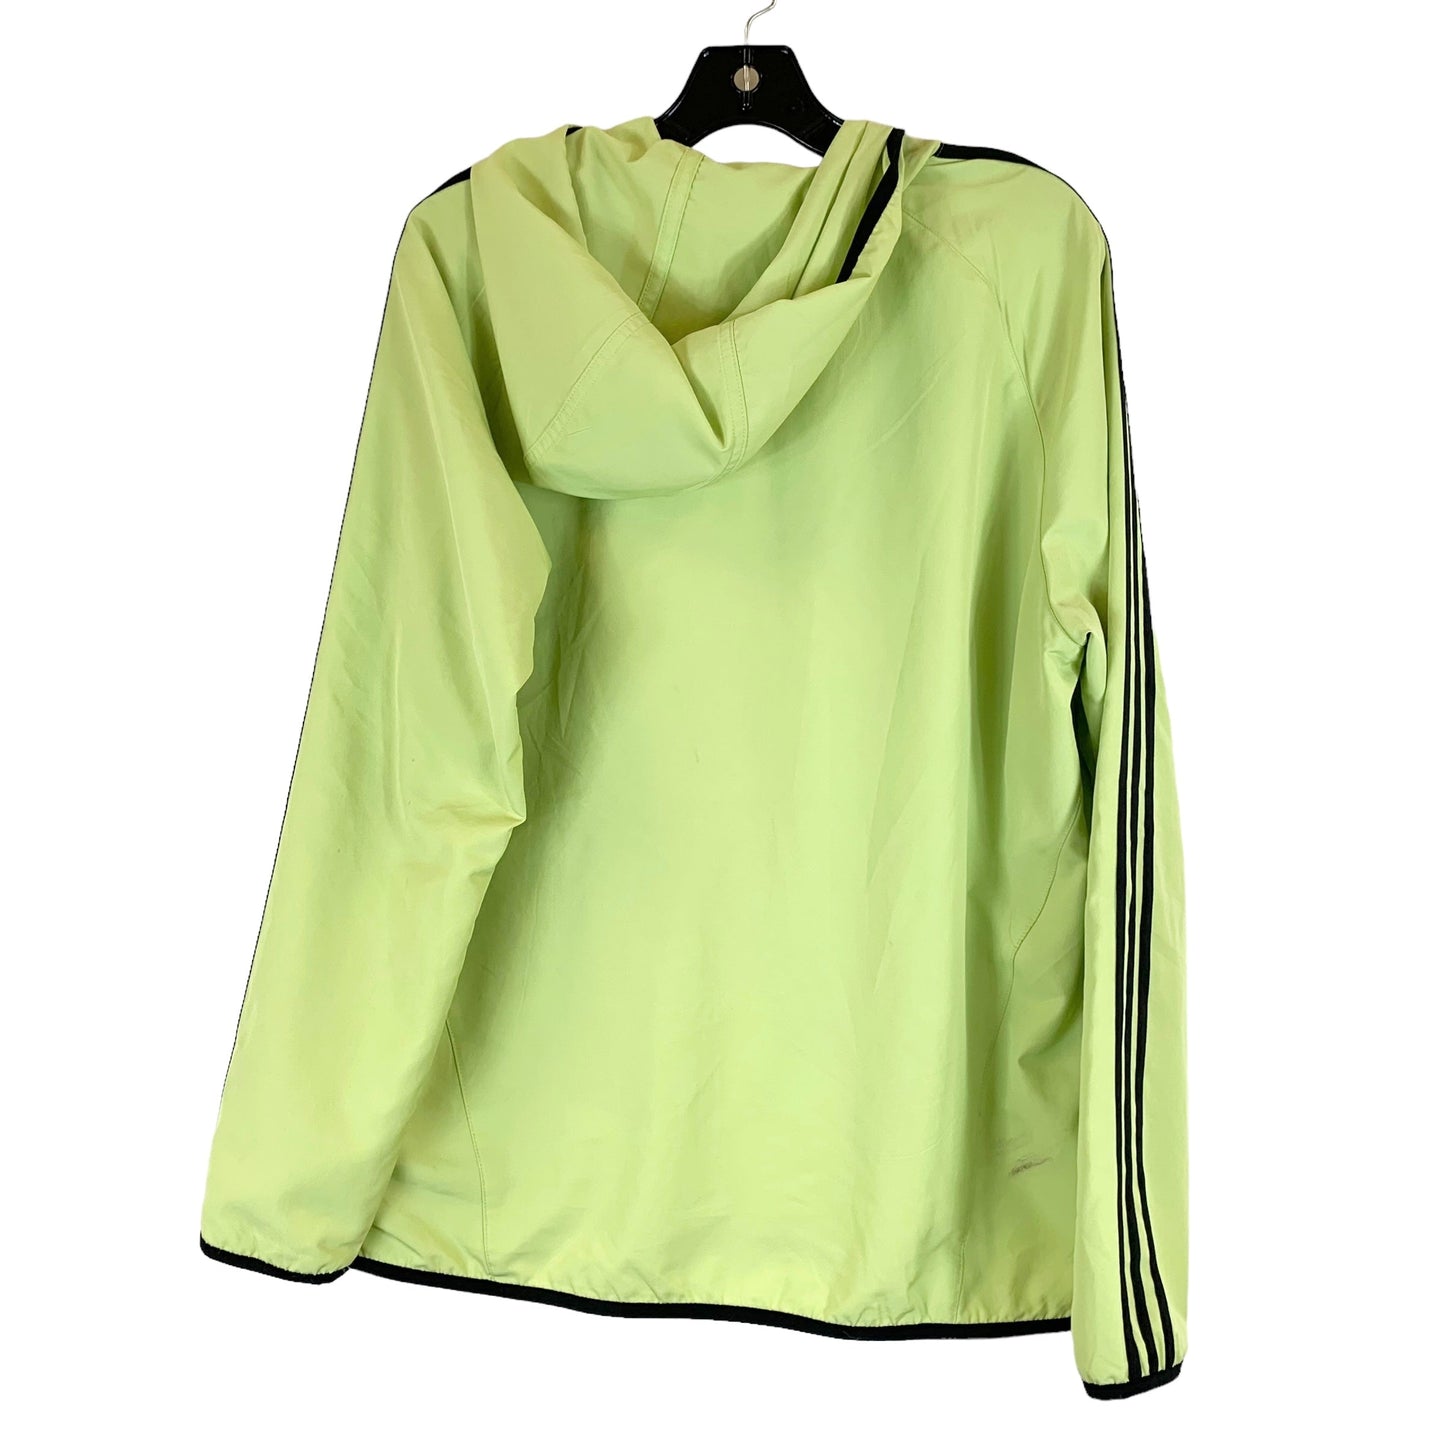 Black & Green Athletic Jacket Adidas, Size L